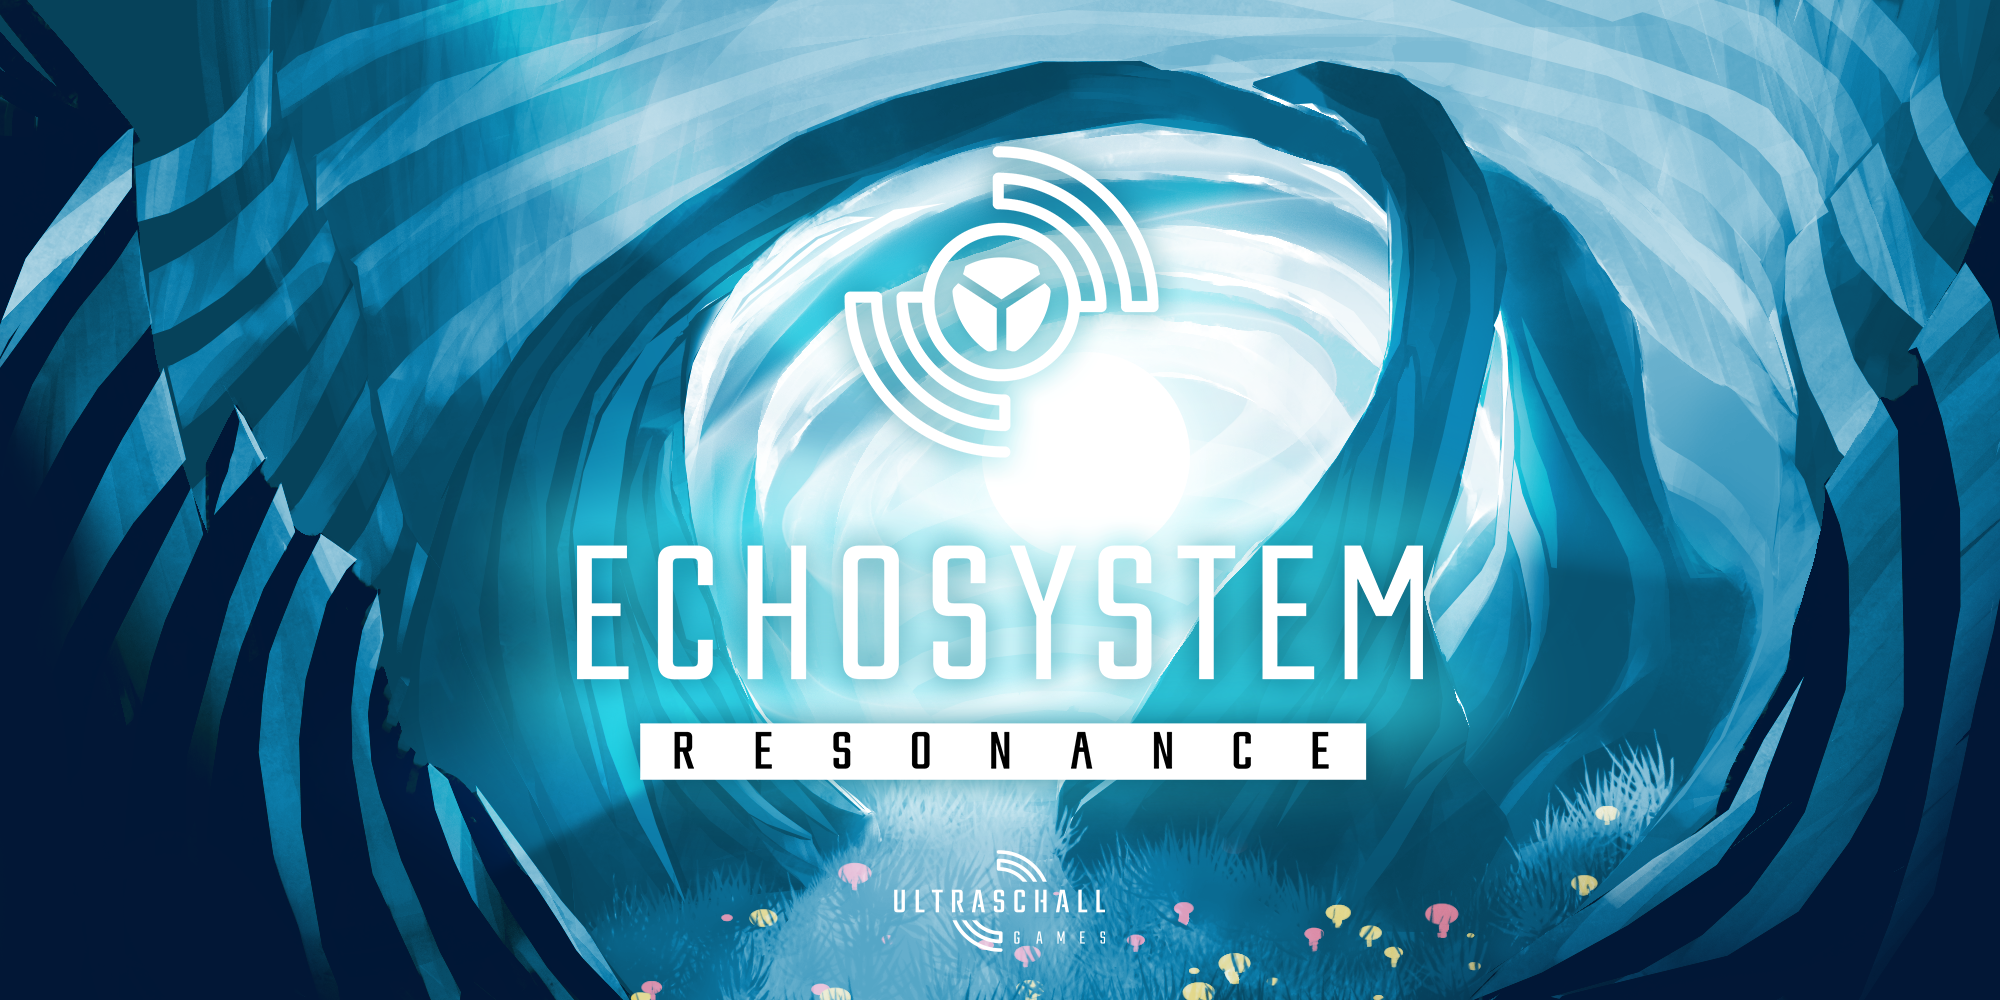 Echosystem: Resonance